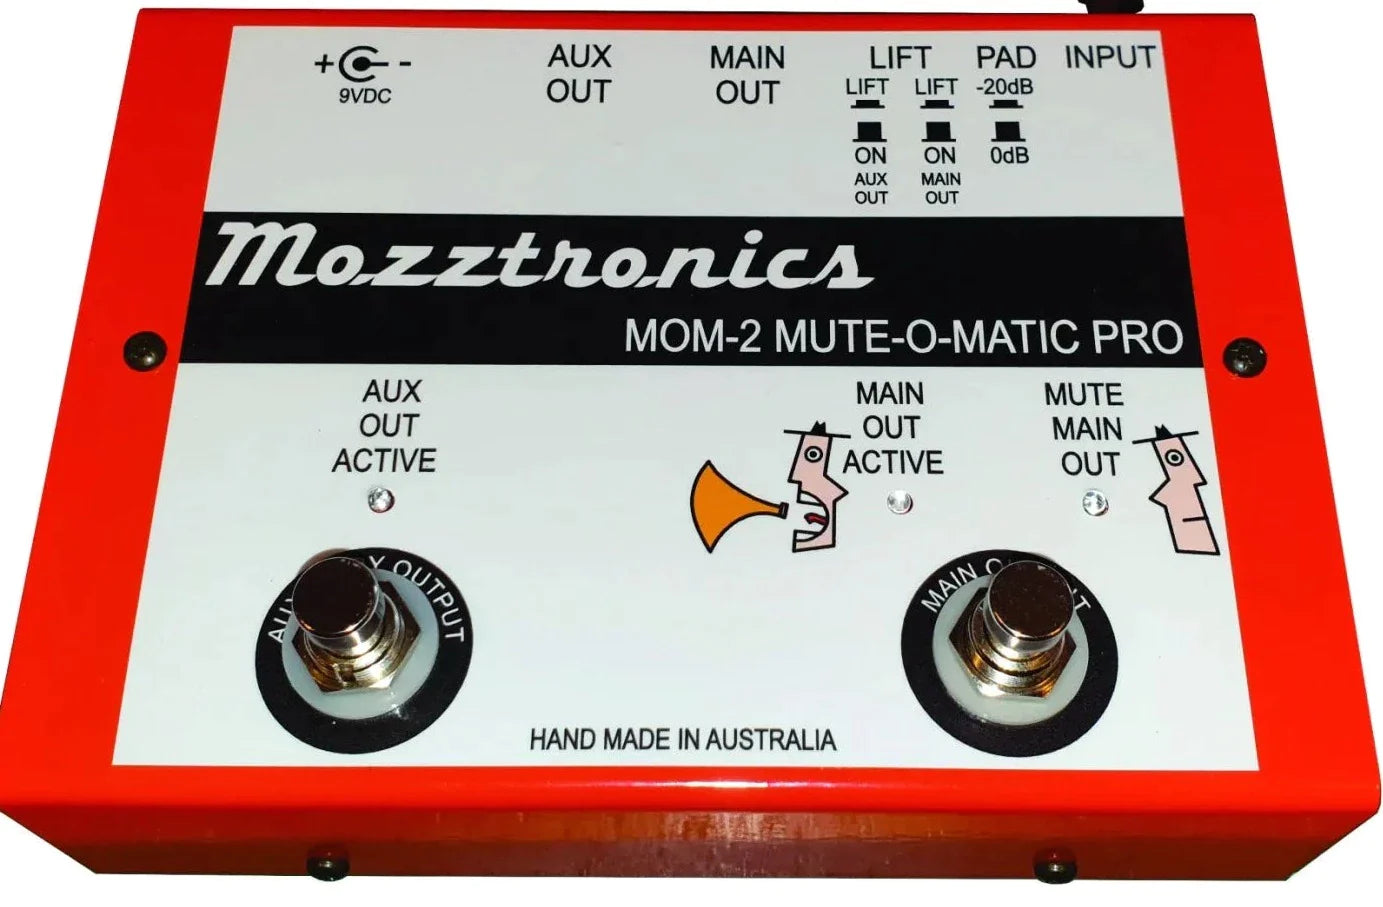 Mozztronics | MOM-2 Mute-o-Matic Pro